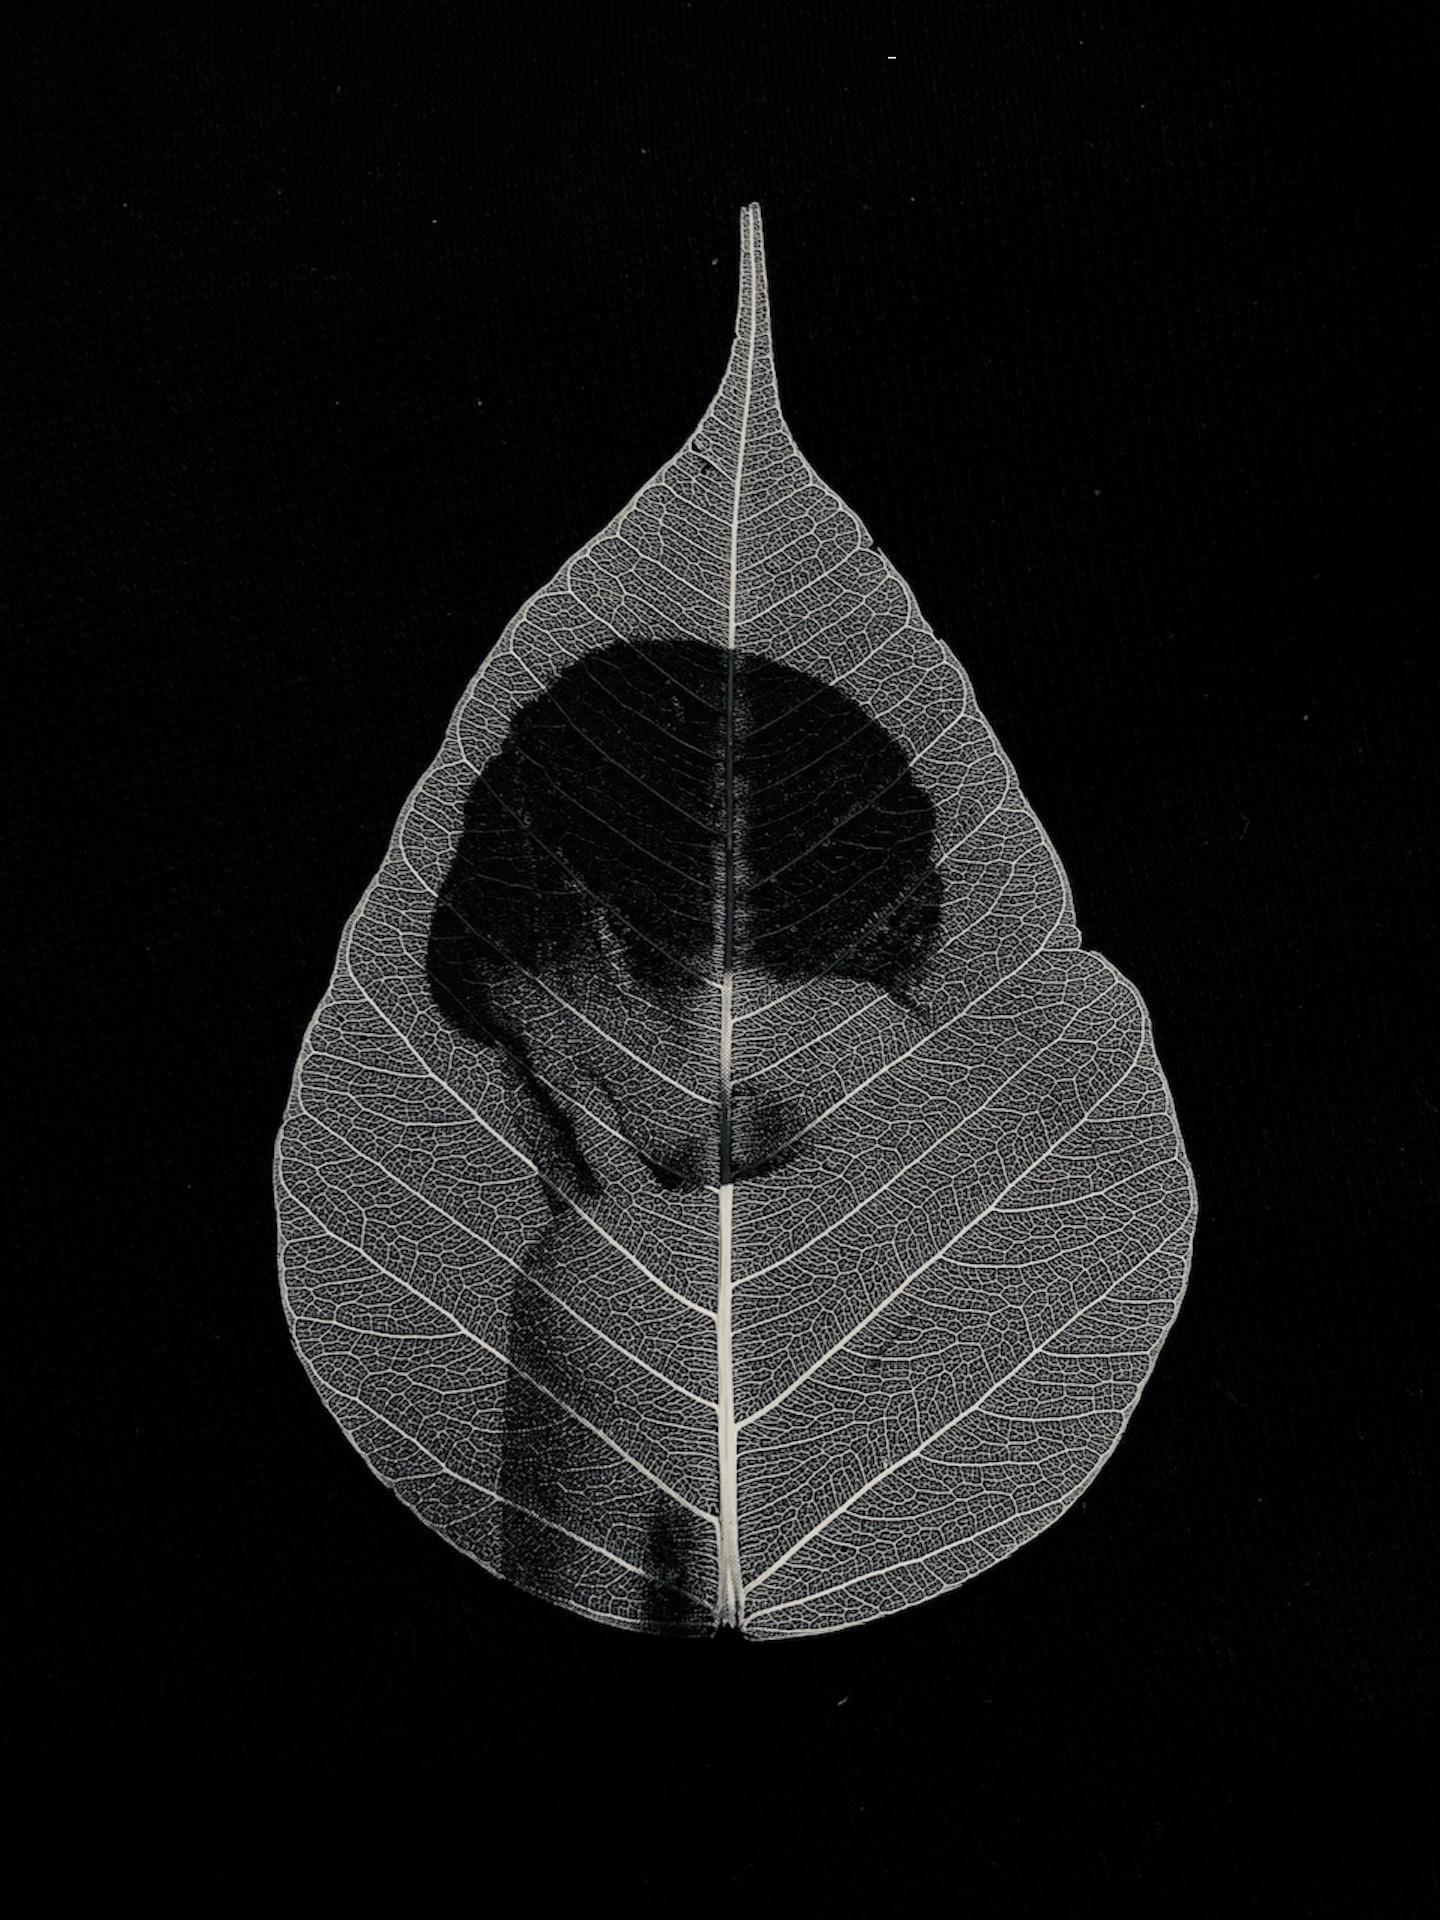 Samantha Bias Portrait Photograph - Alone -black and white transferred photograph onto preserved skeleton leaf